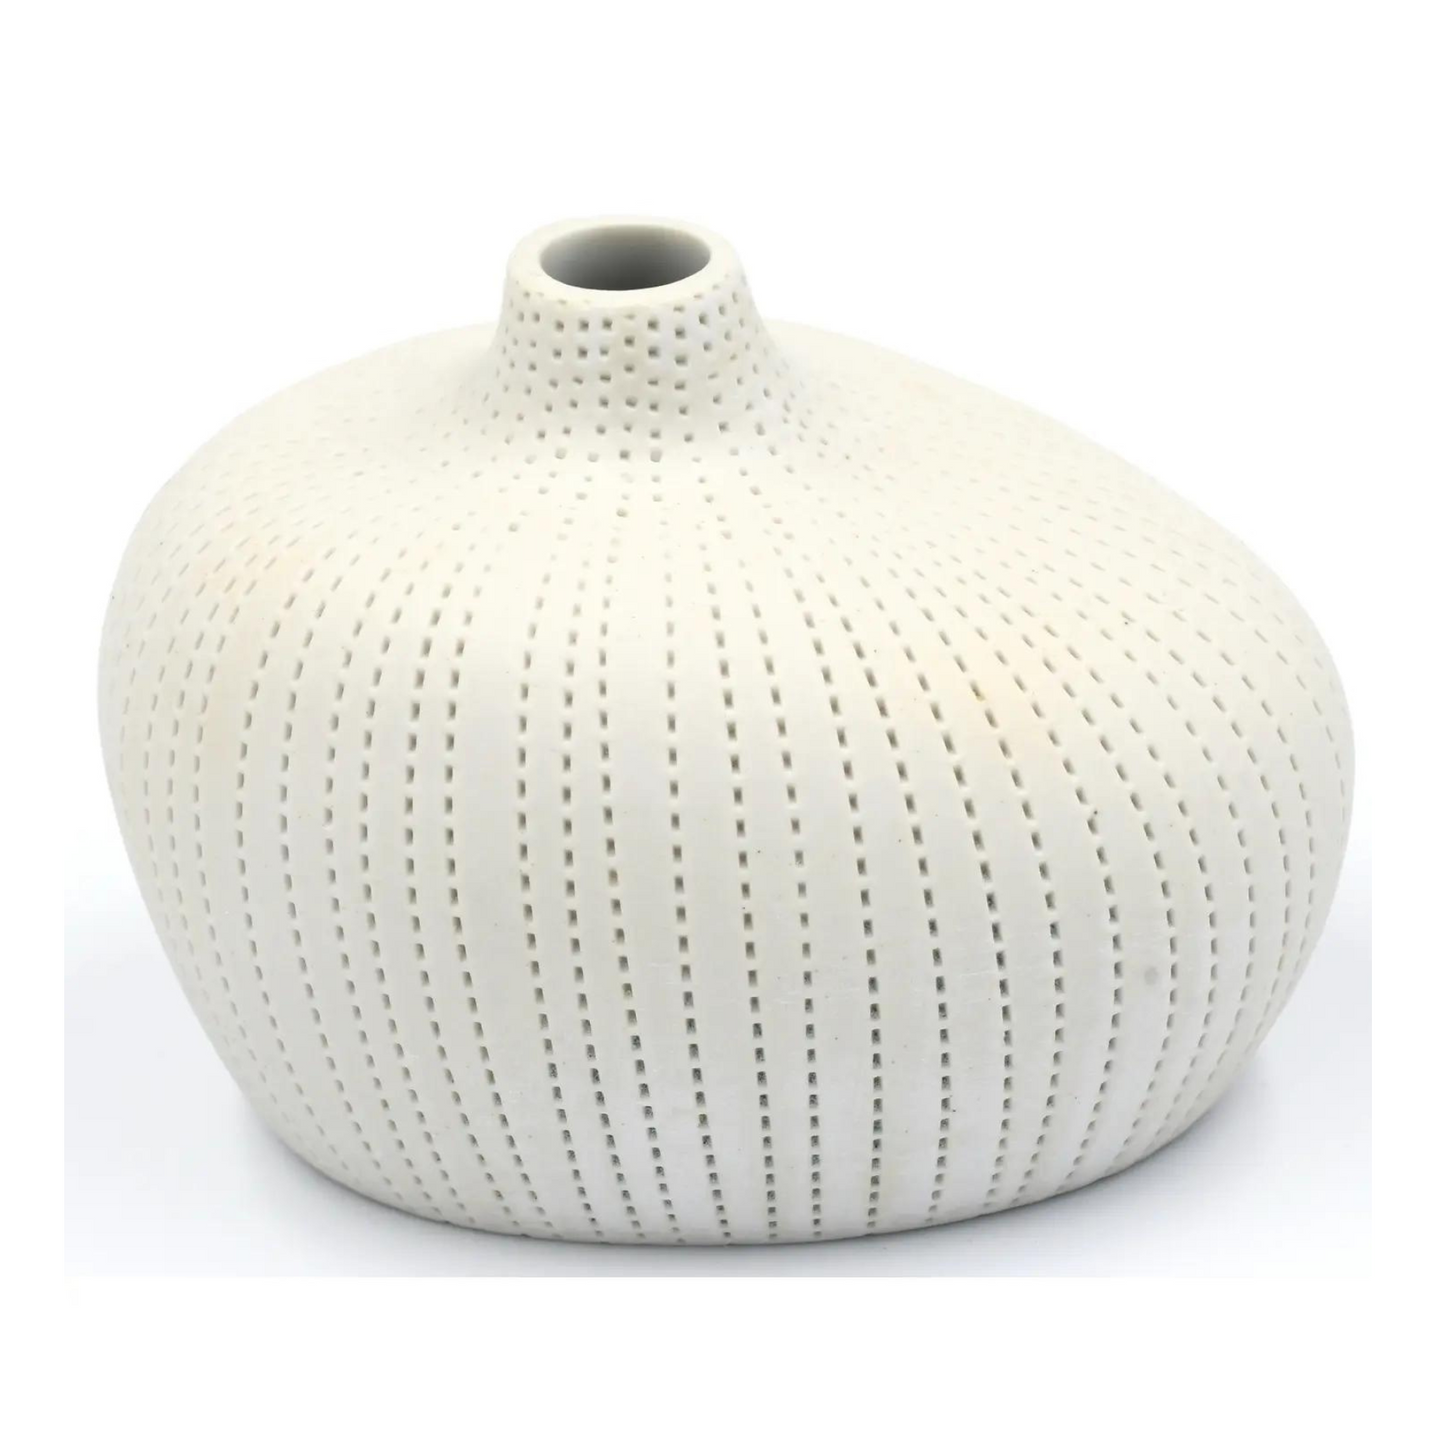 Gugu Pim White Porcelain Bud Vase